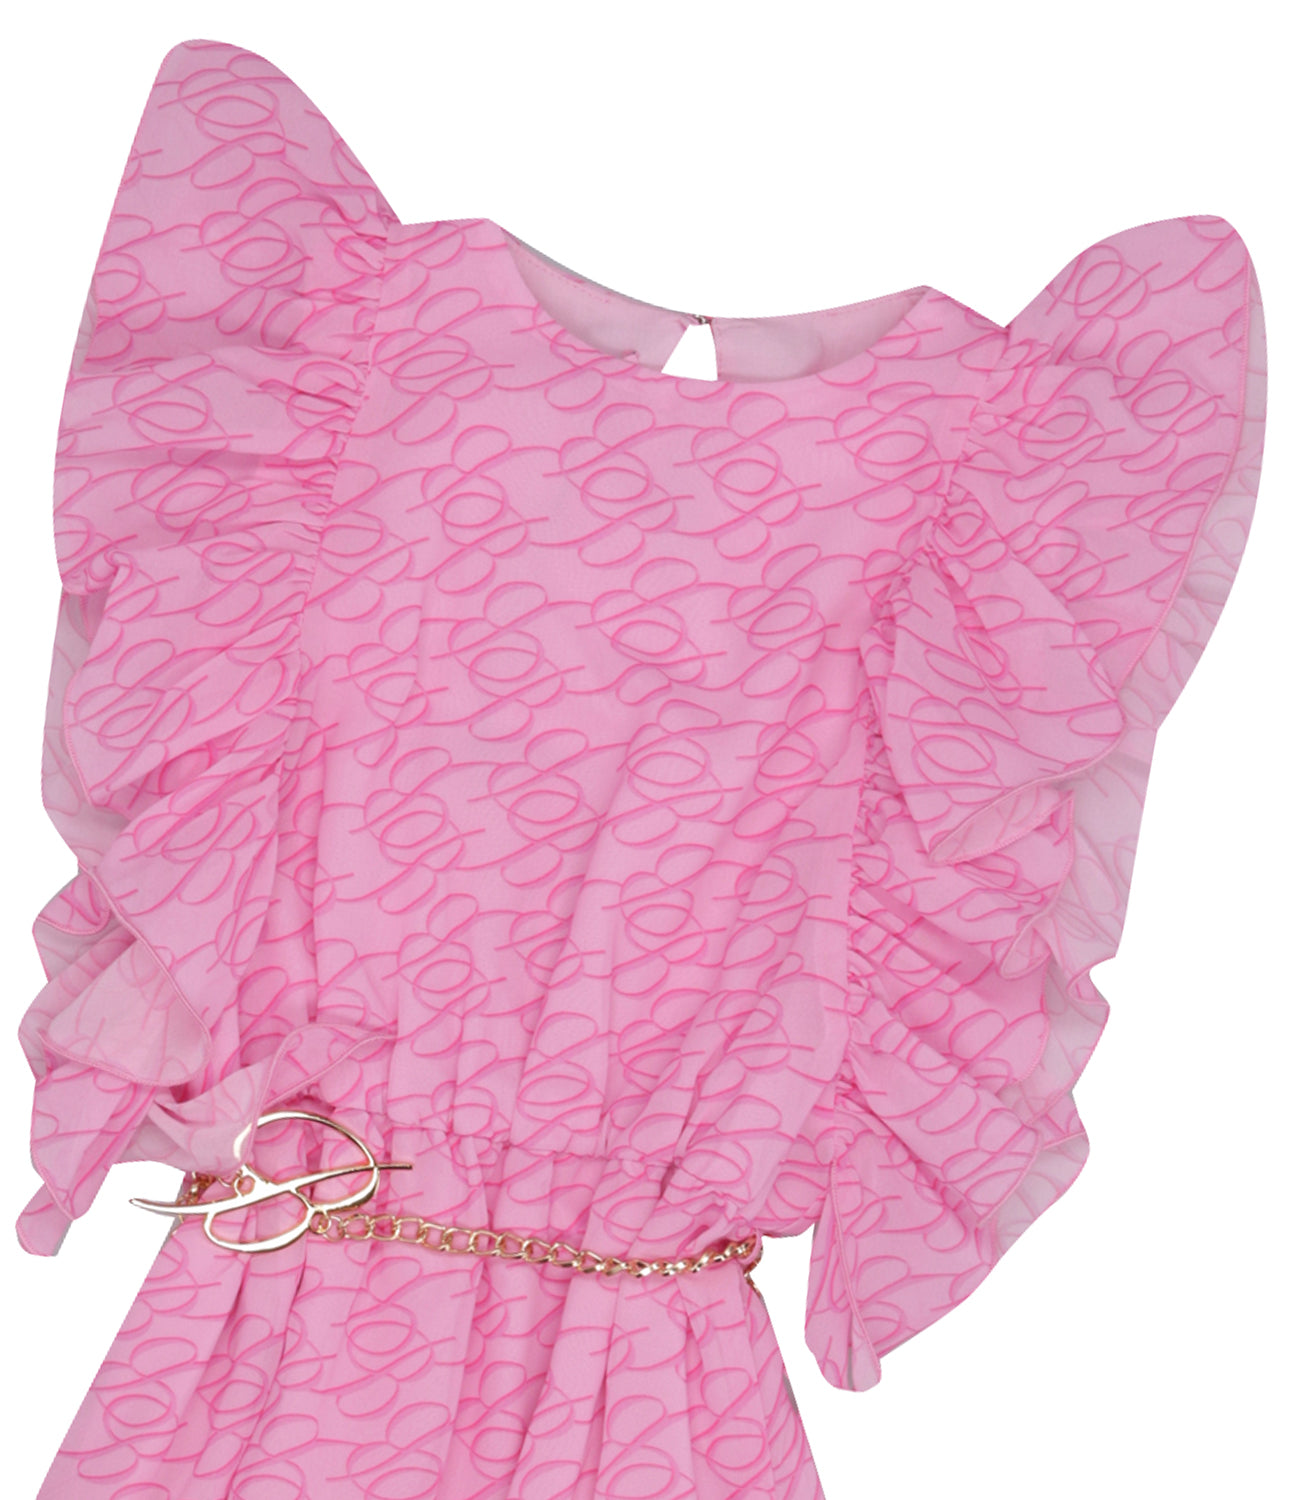 Miss Blumarine | Light Pink Dress